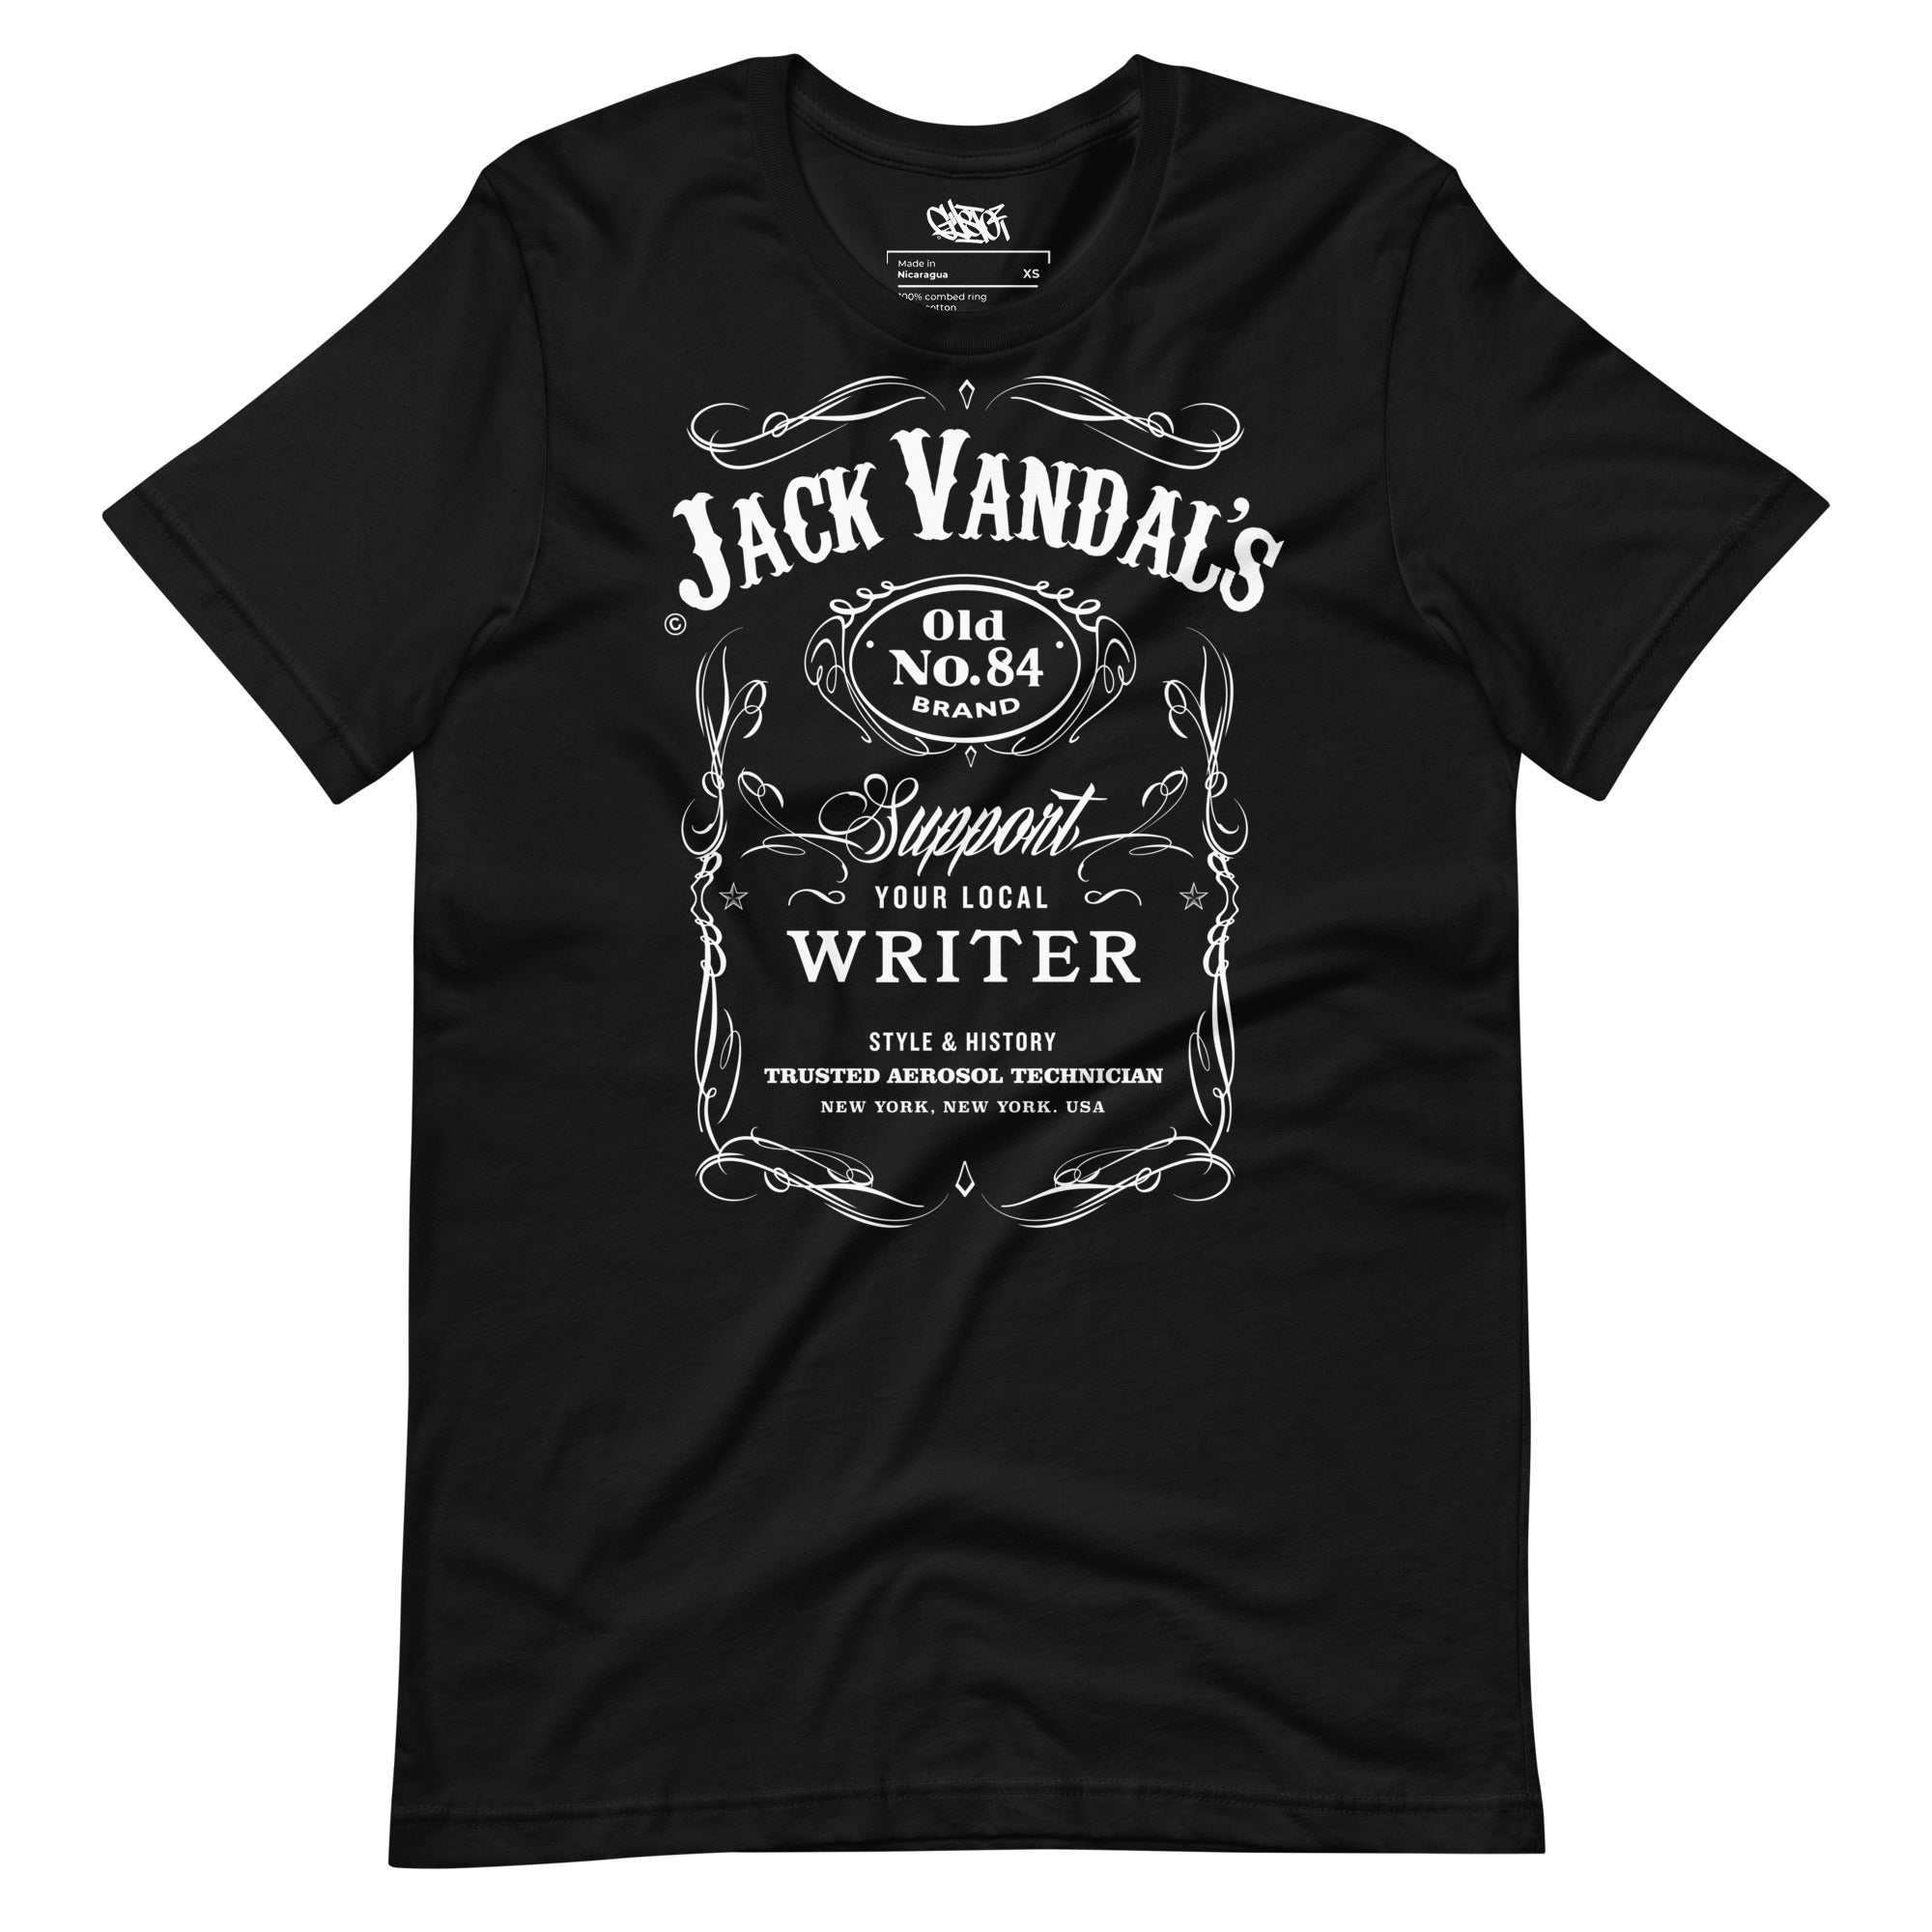 Jack Vandal's Black Label - Short-Sleeve Unisex T-Shirt